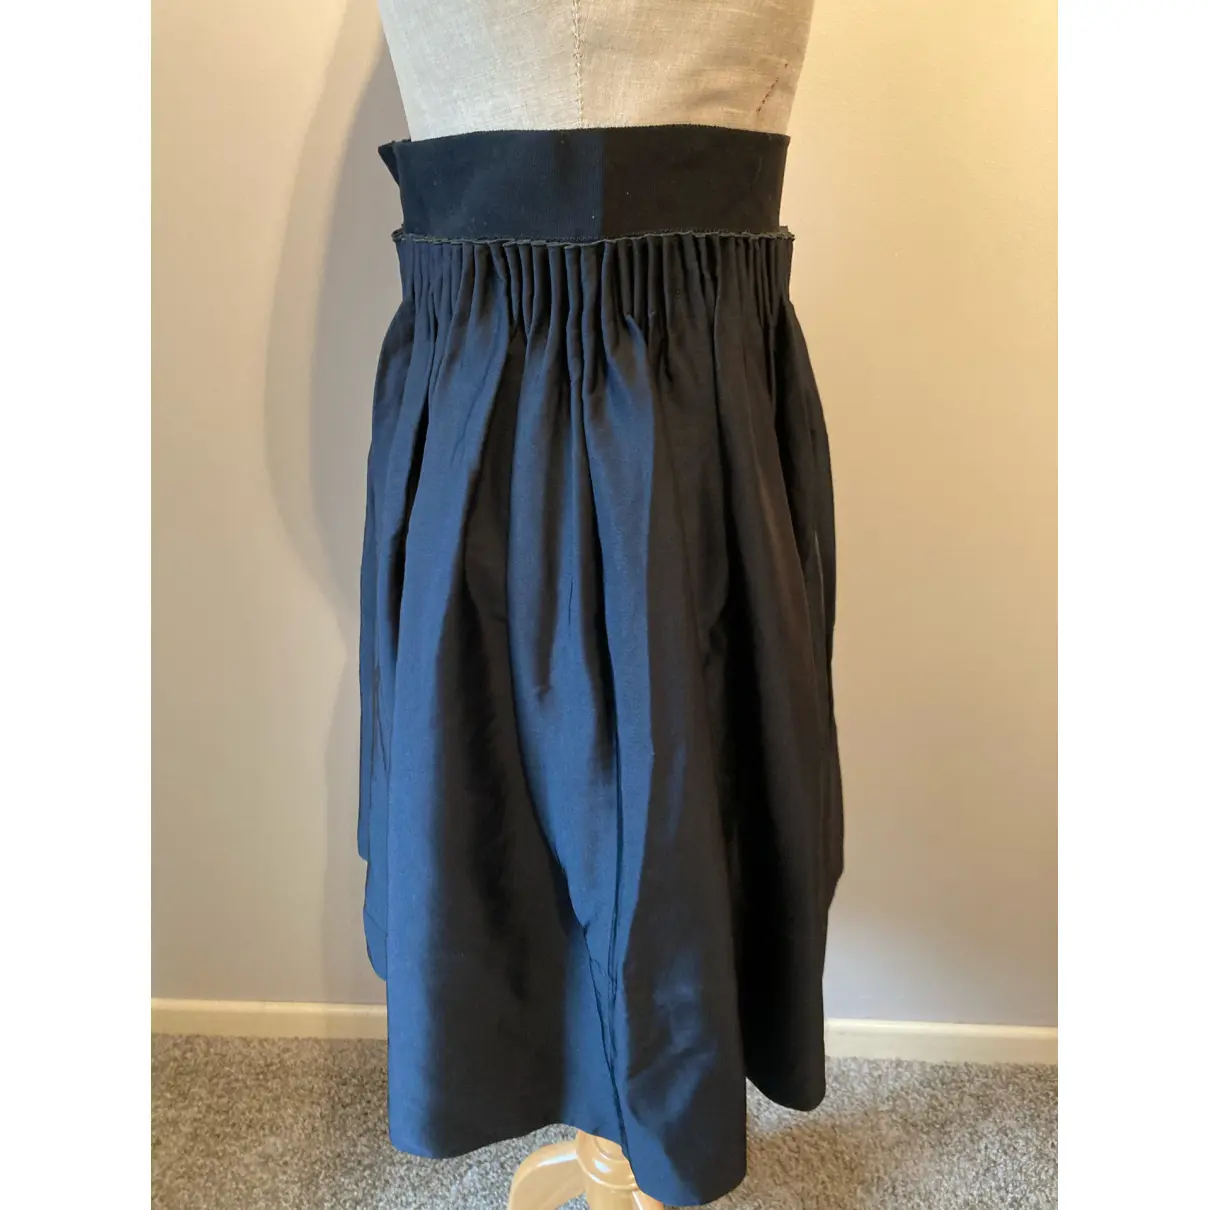 Buy Maison Rabih Kayrouz Silk skirt online